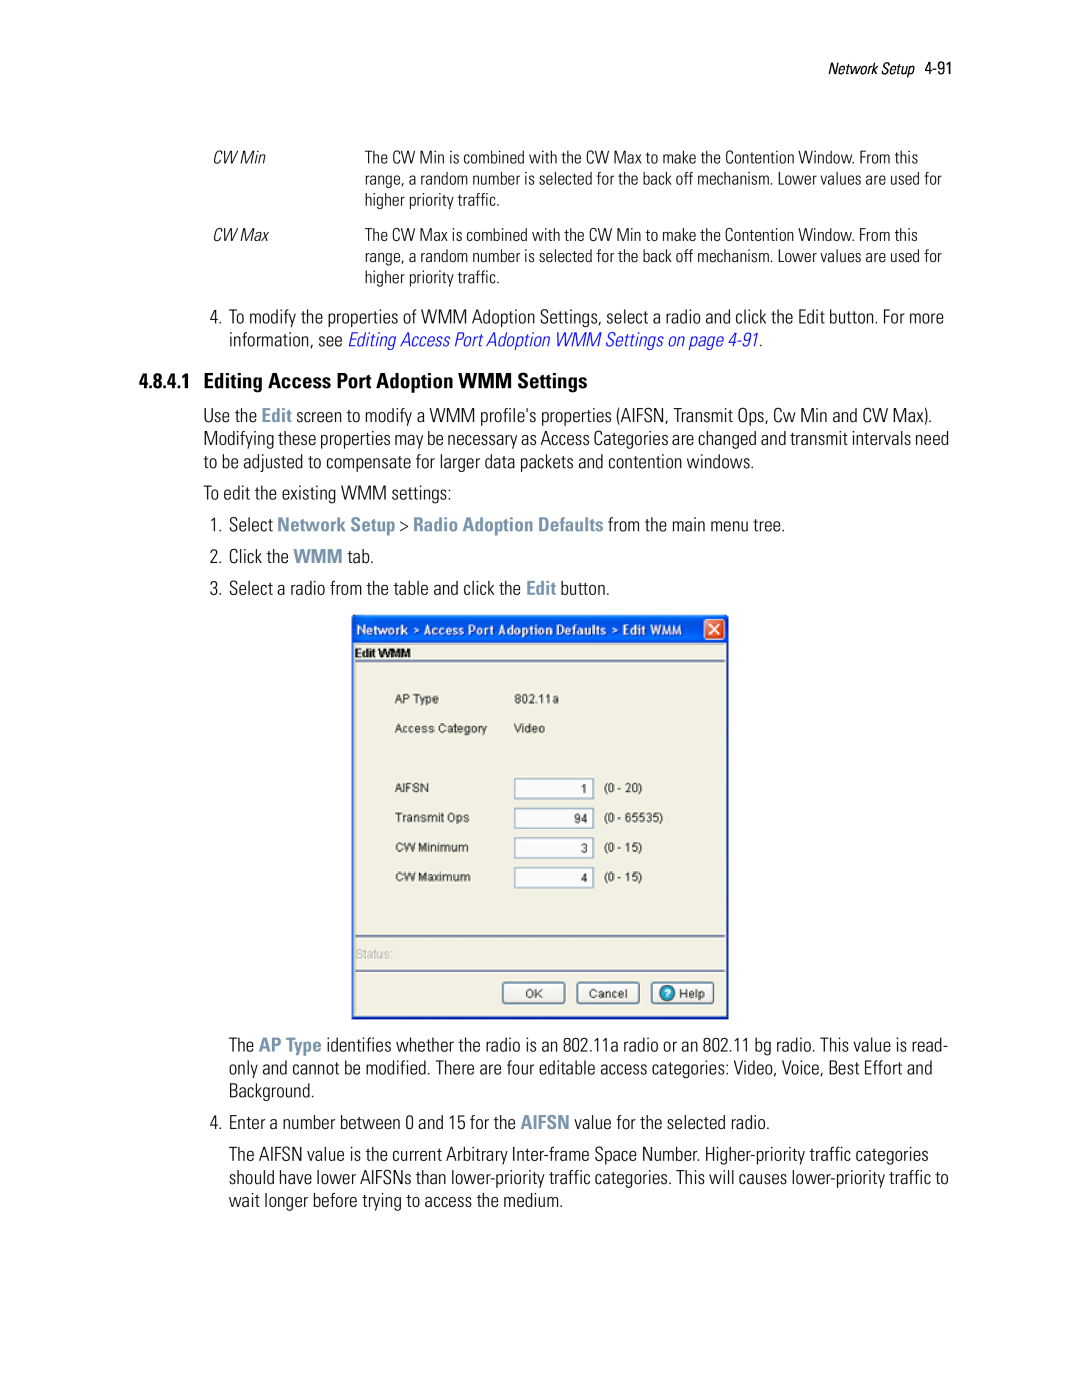 Motorola WS5100 manual 4.8.4.1Editing Access Port Adoption WMM Settings 